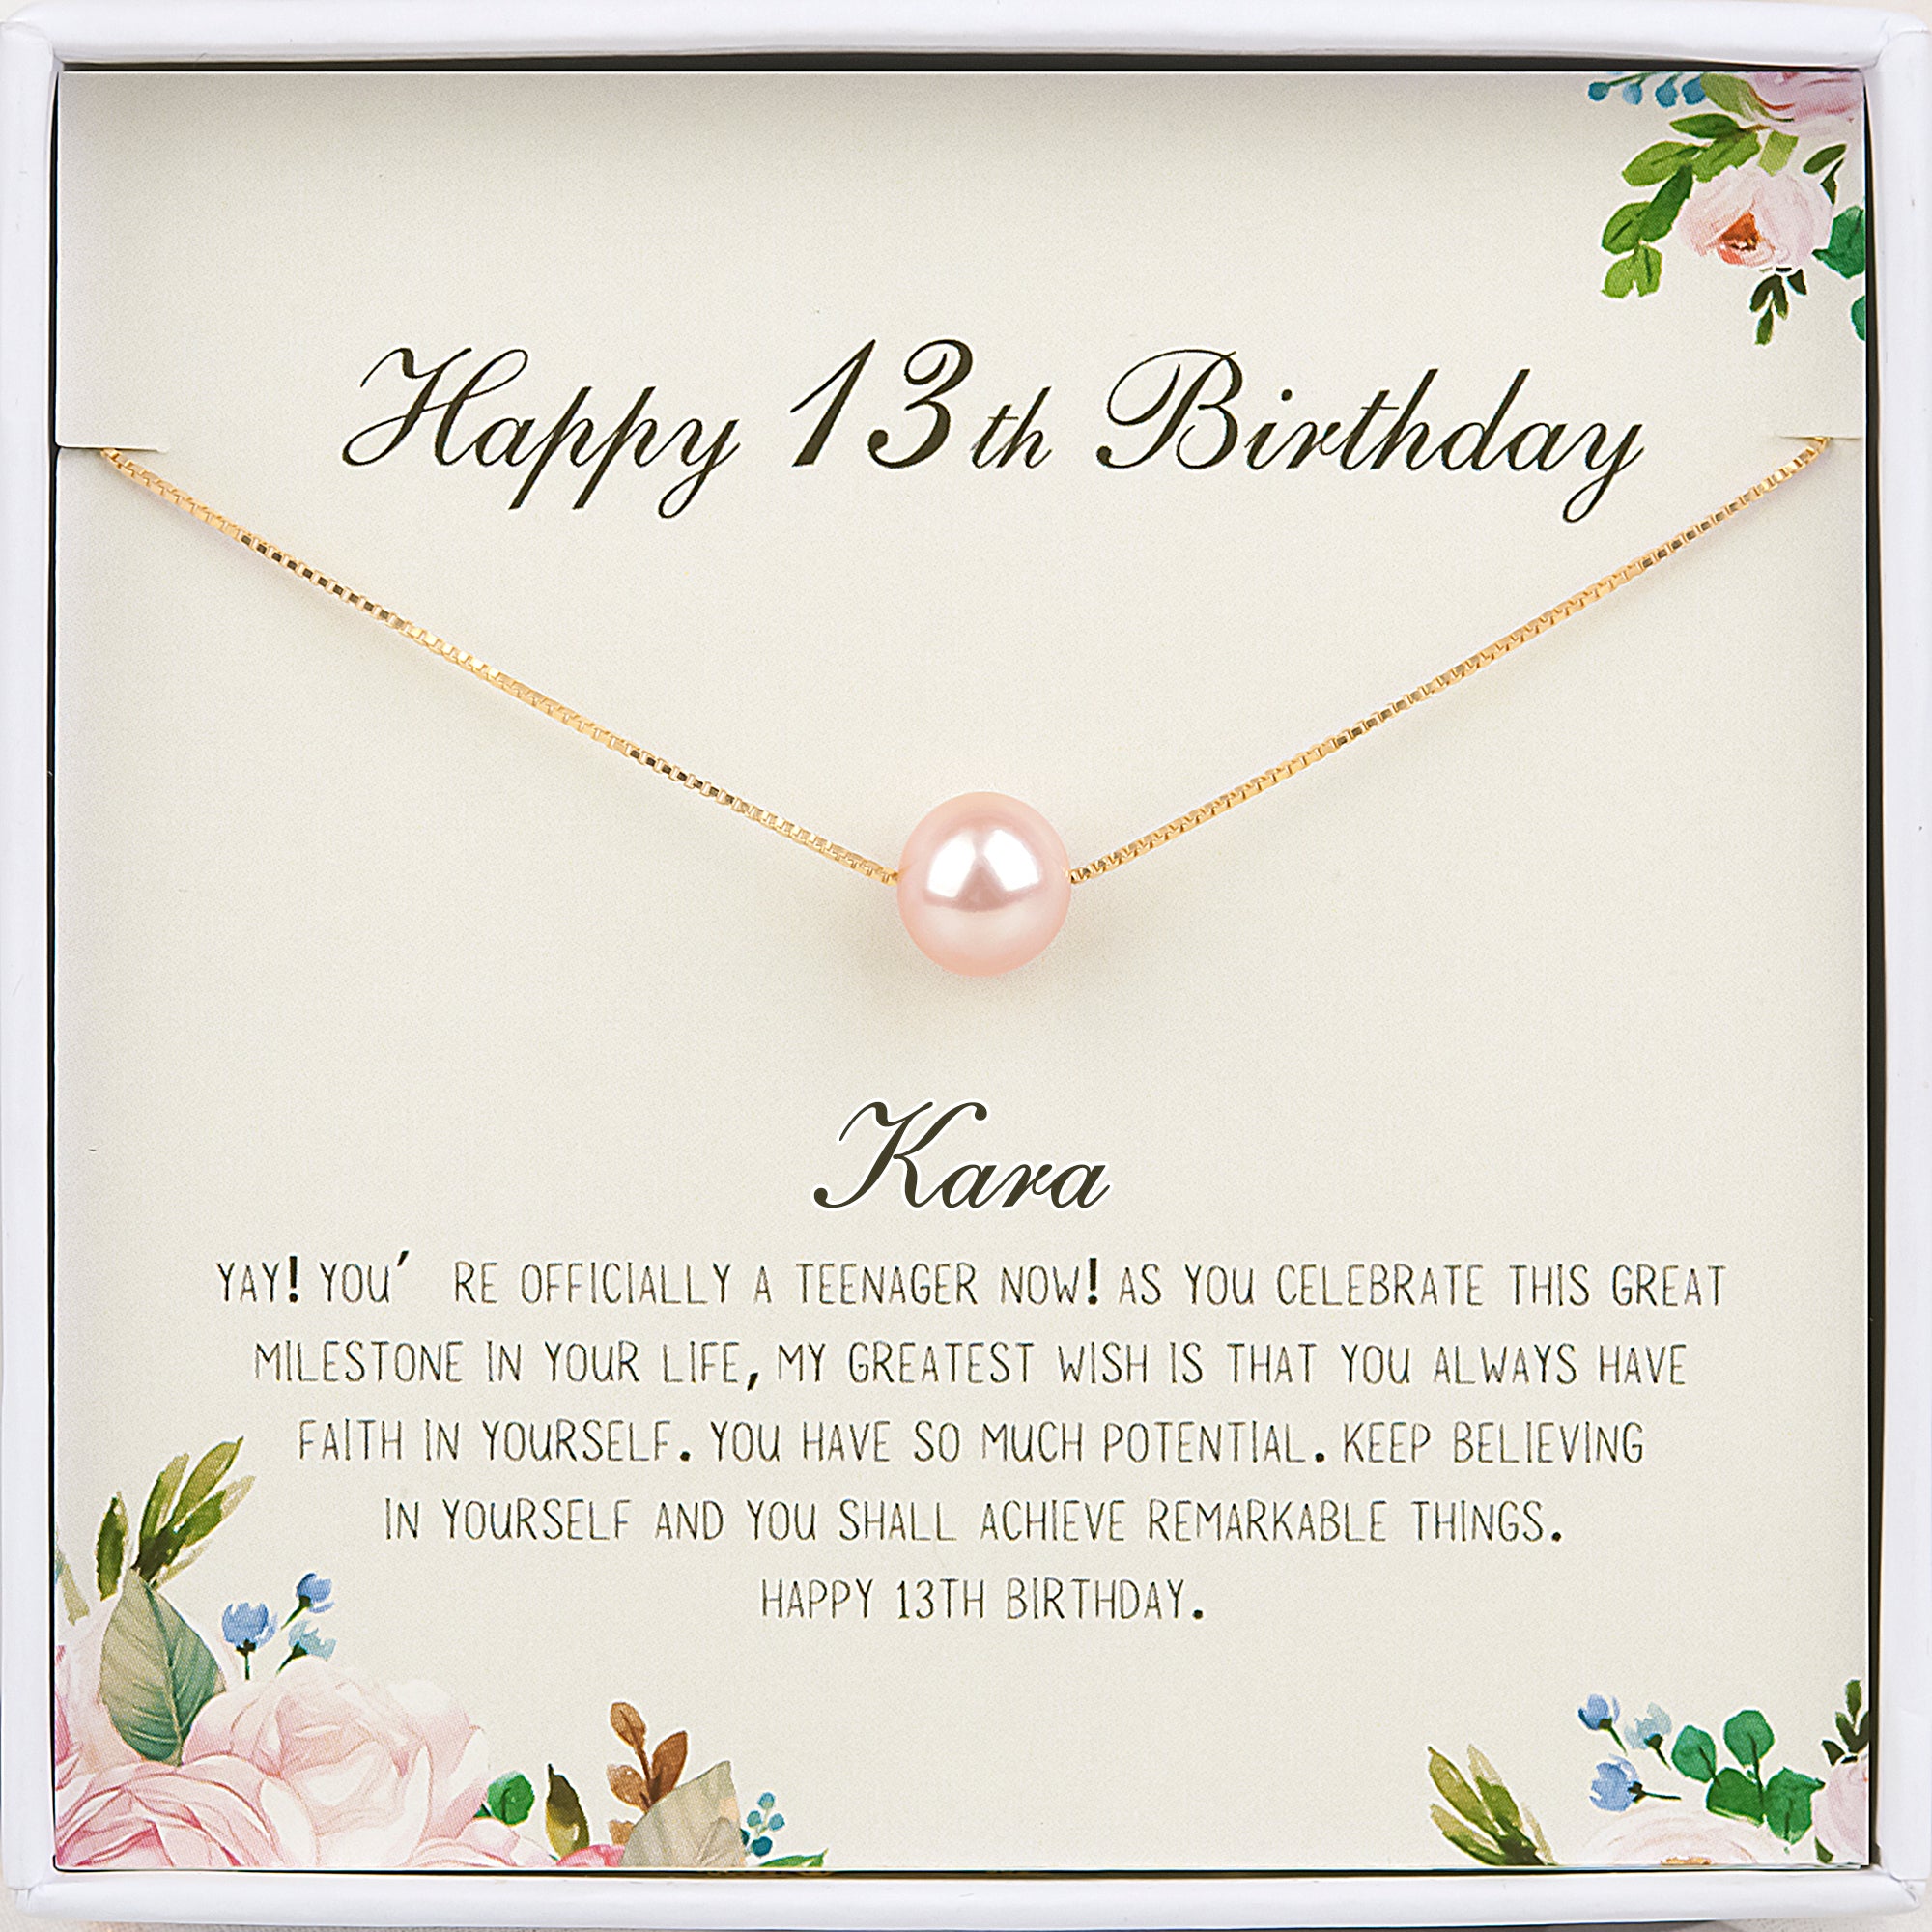 Share 257+ jewelry birthday gifts